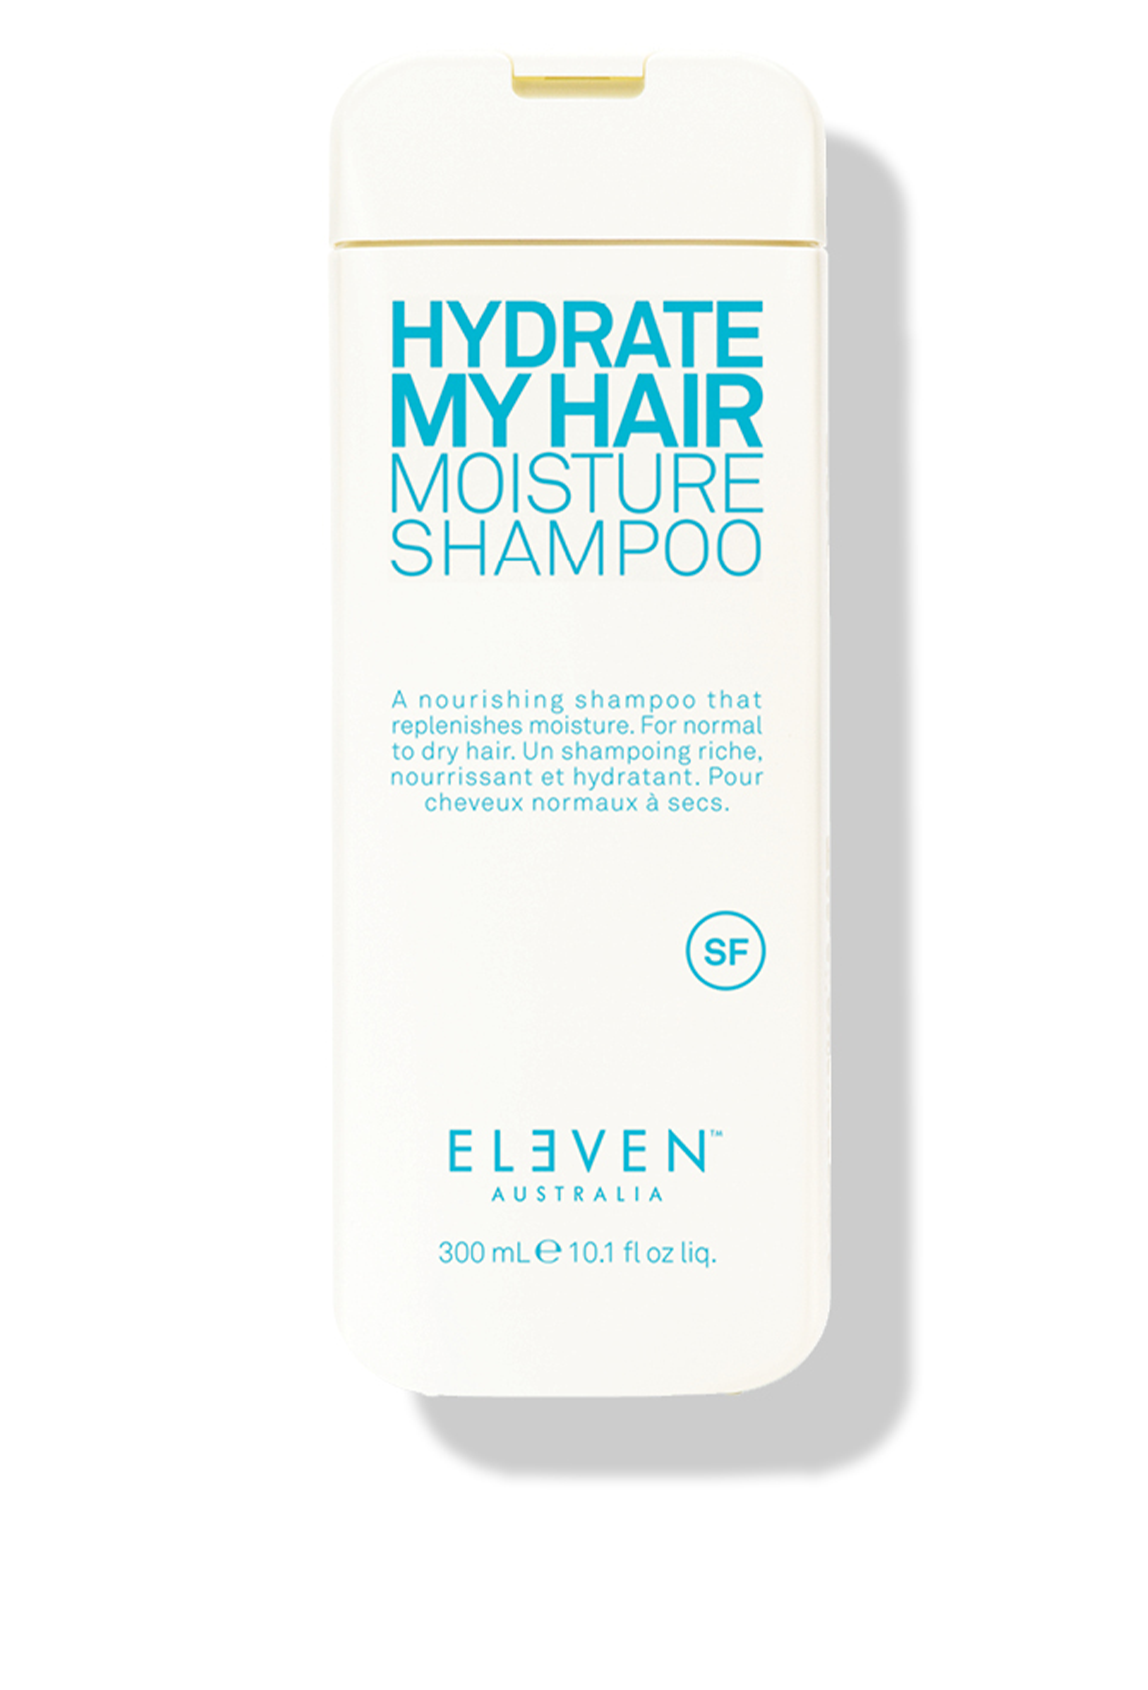 Eleven Australia hydrate my hair shampoo